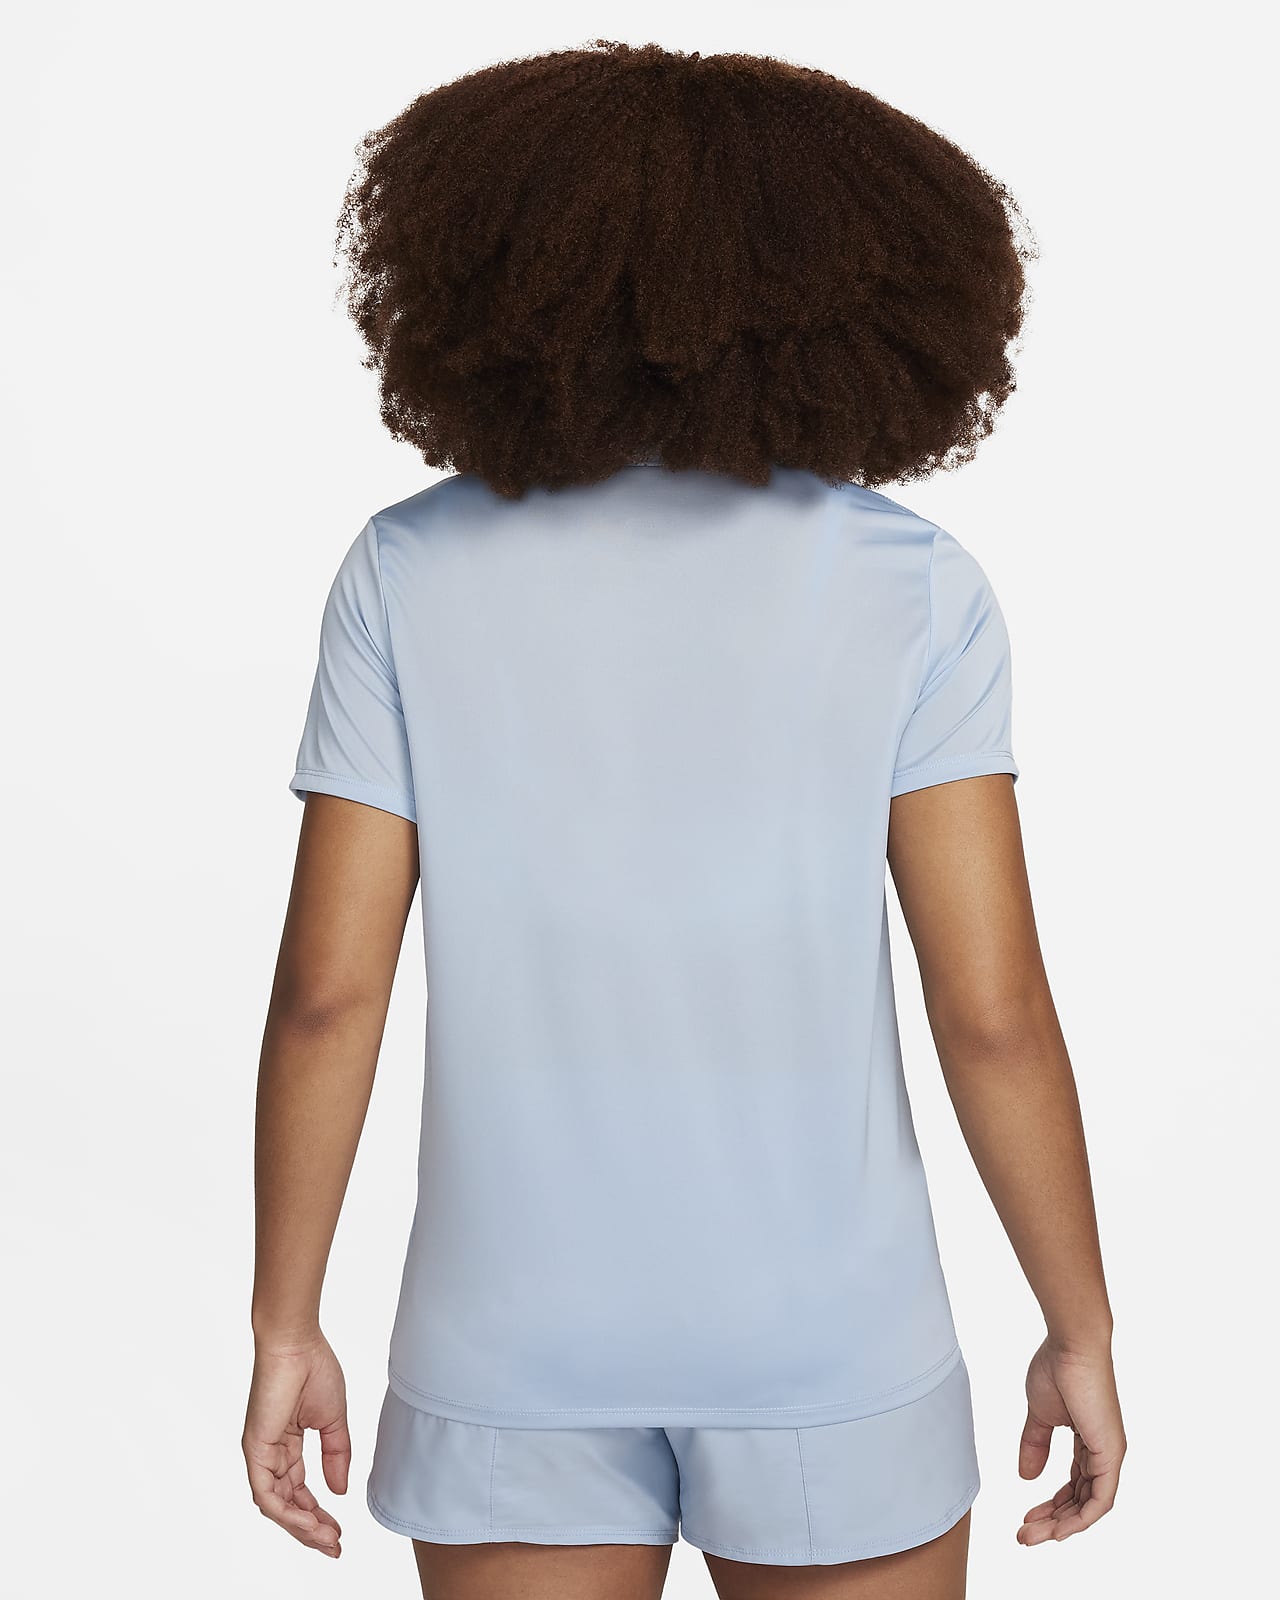 Nike Women's Dri-FIT Graphic T-Shirt.